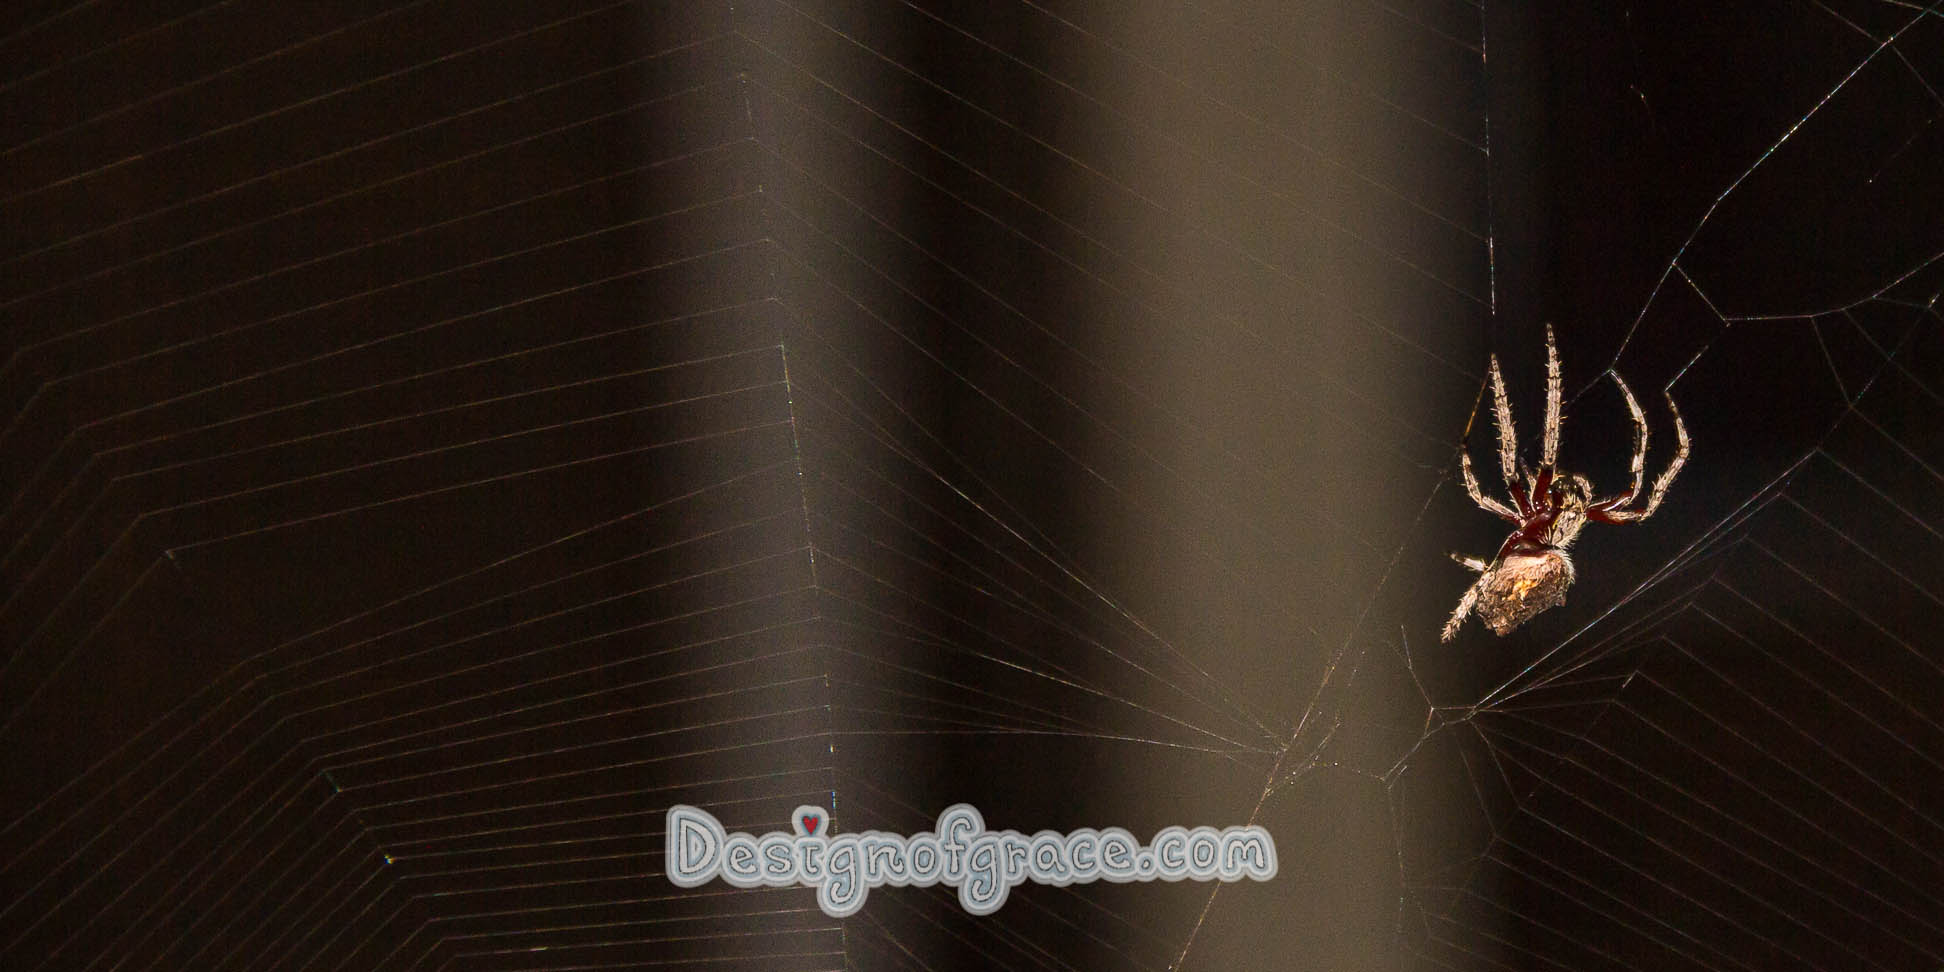 Big spider on web at night